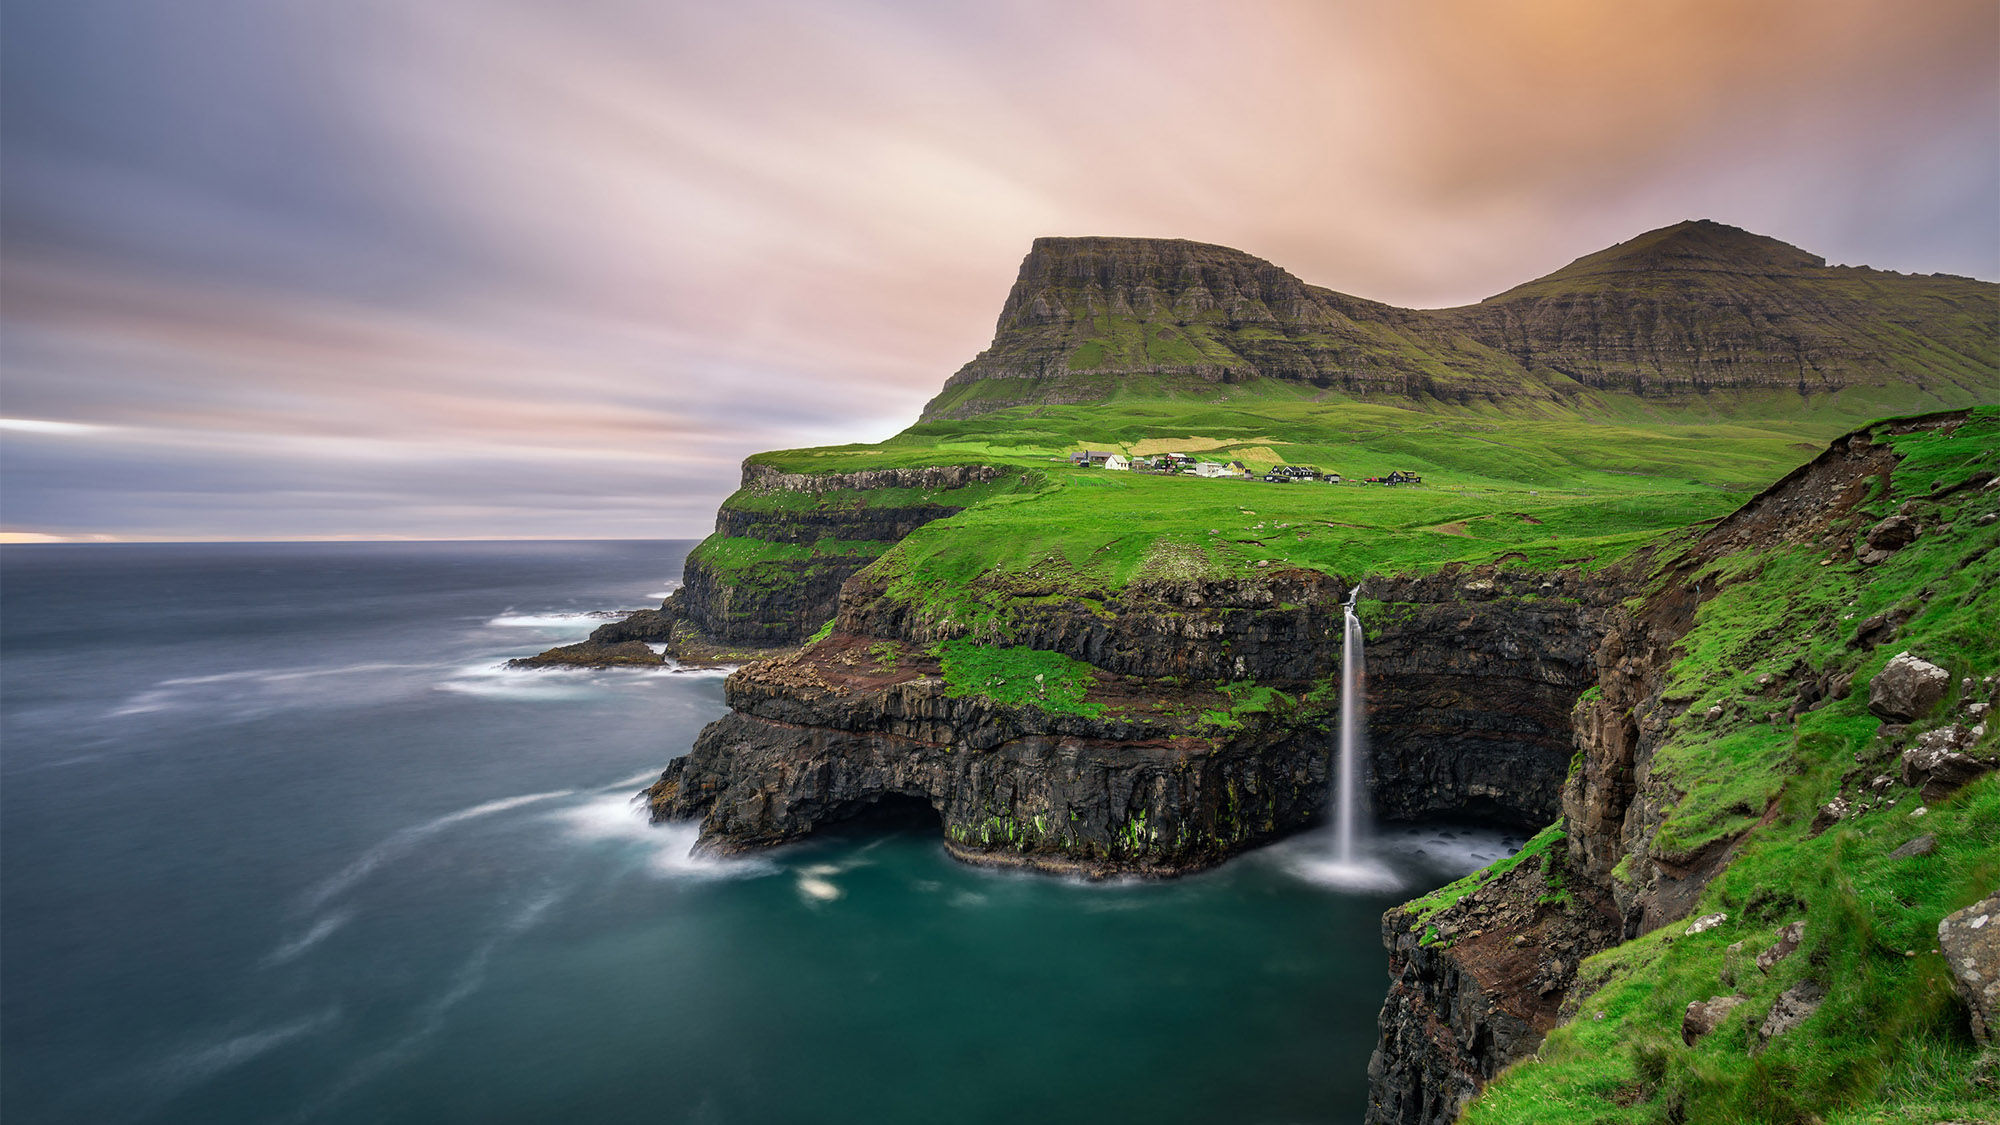 Gasadalur village, Vagar, Faroe Islands.